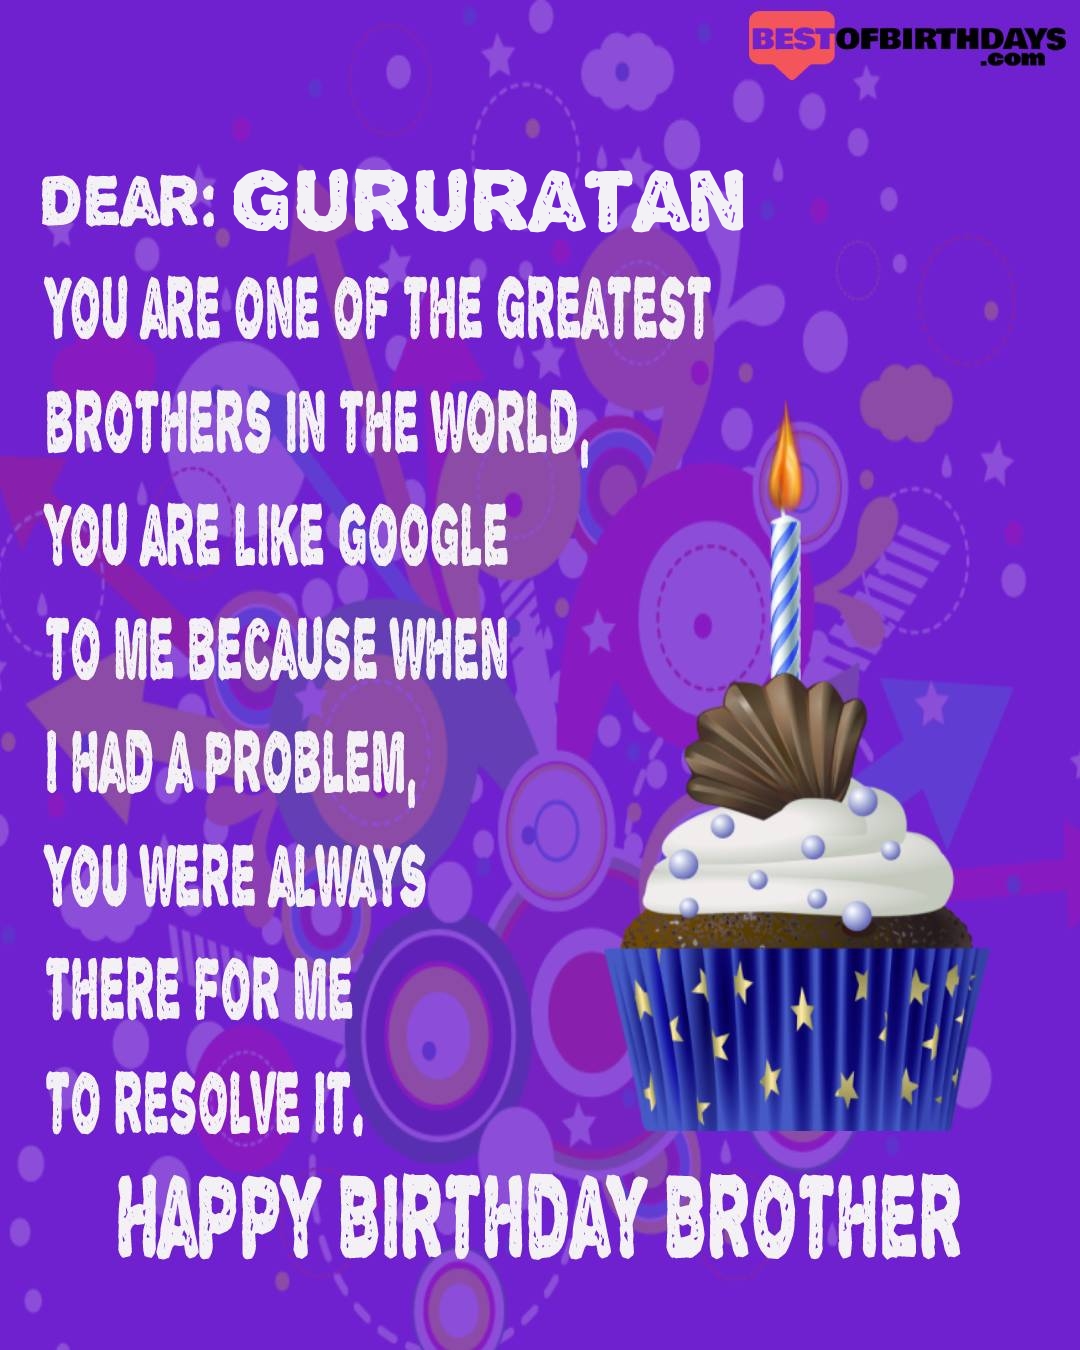 Happy birthday gururatan bhai brother bro